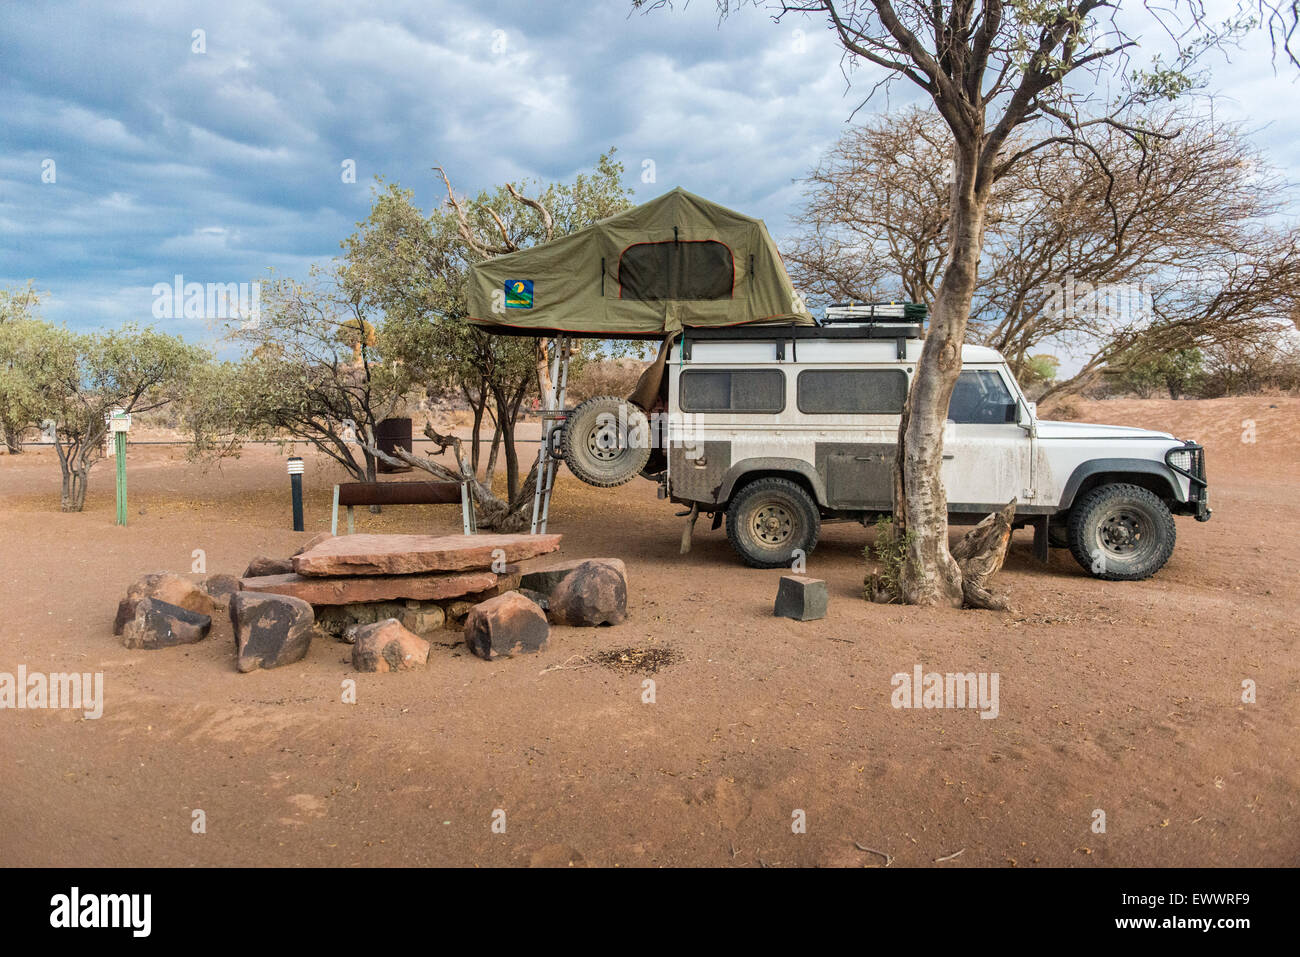 Keetmanshoop, Namibia, Afrika - Land Rover mit Dachzelt auf einem Campingplatz abgestellt Stockfoto